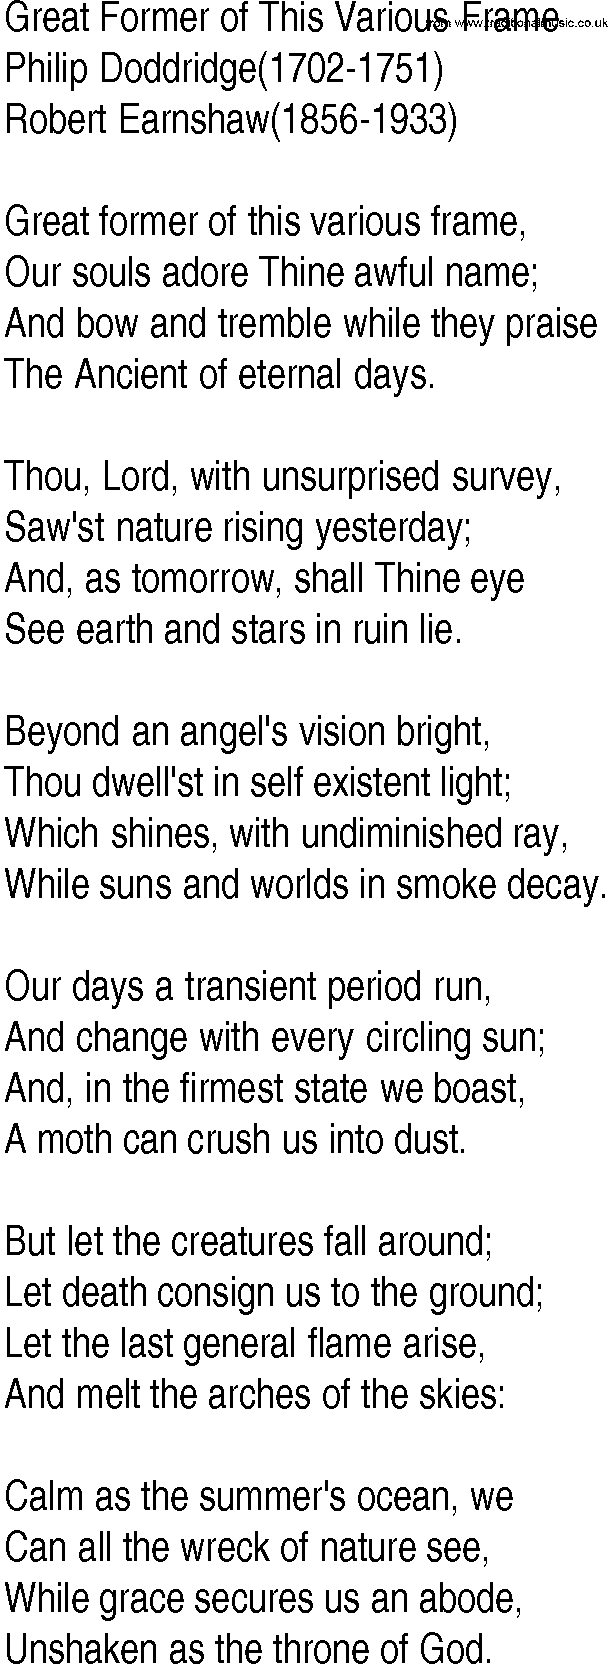 Hymn and Gospel Song: Great Former of This Various Frame by Philip Doddridge lyrics